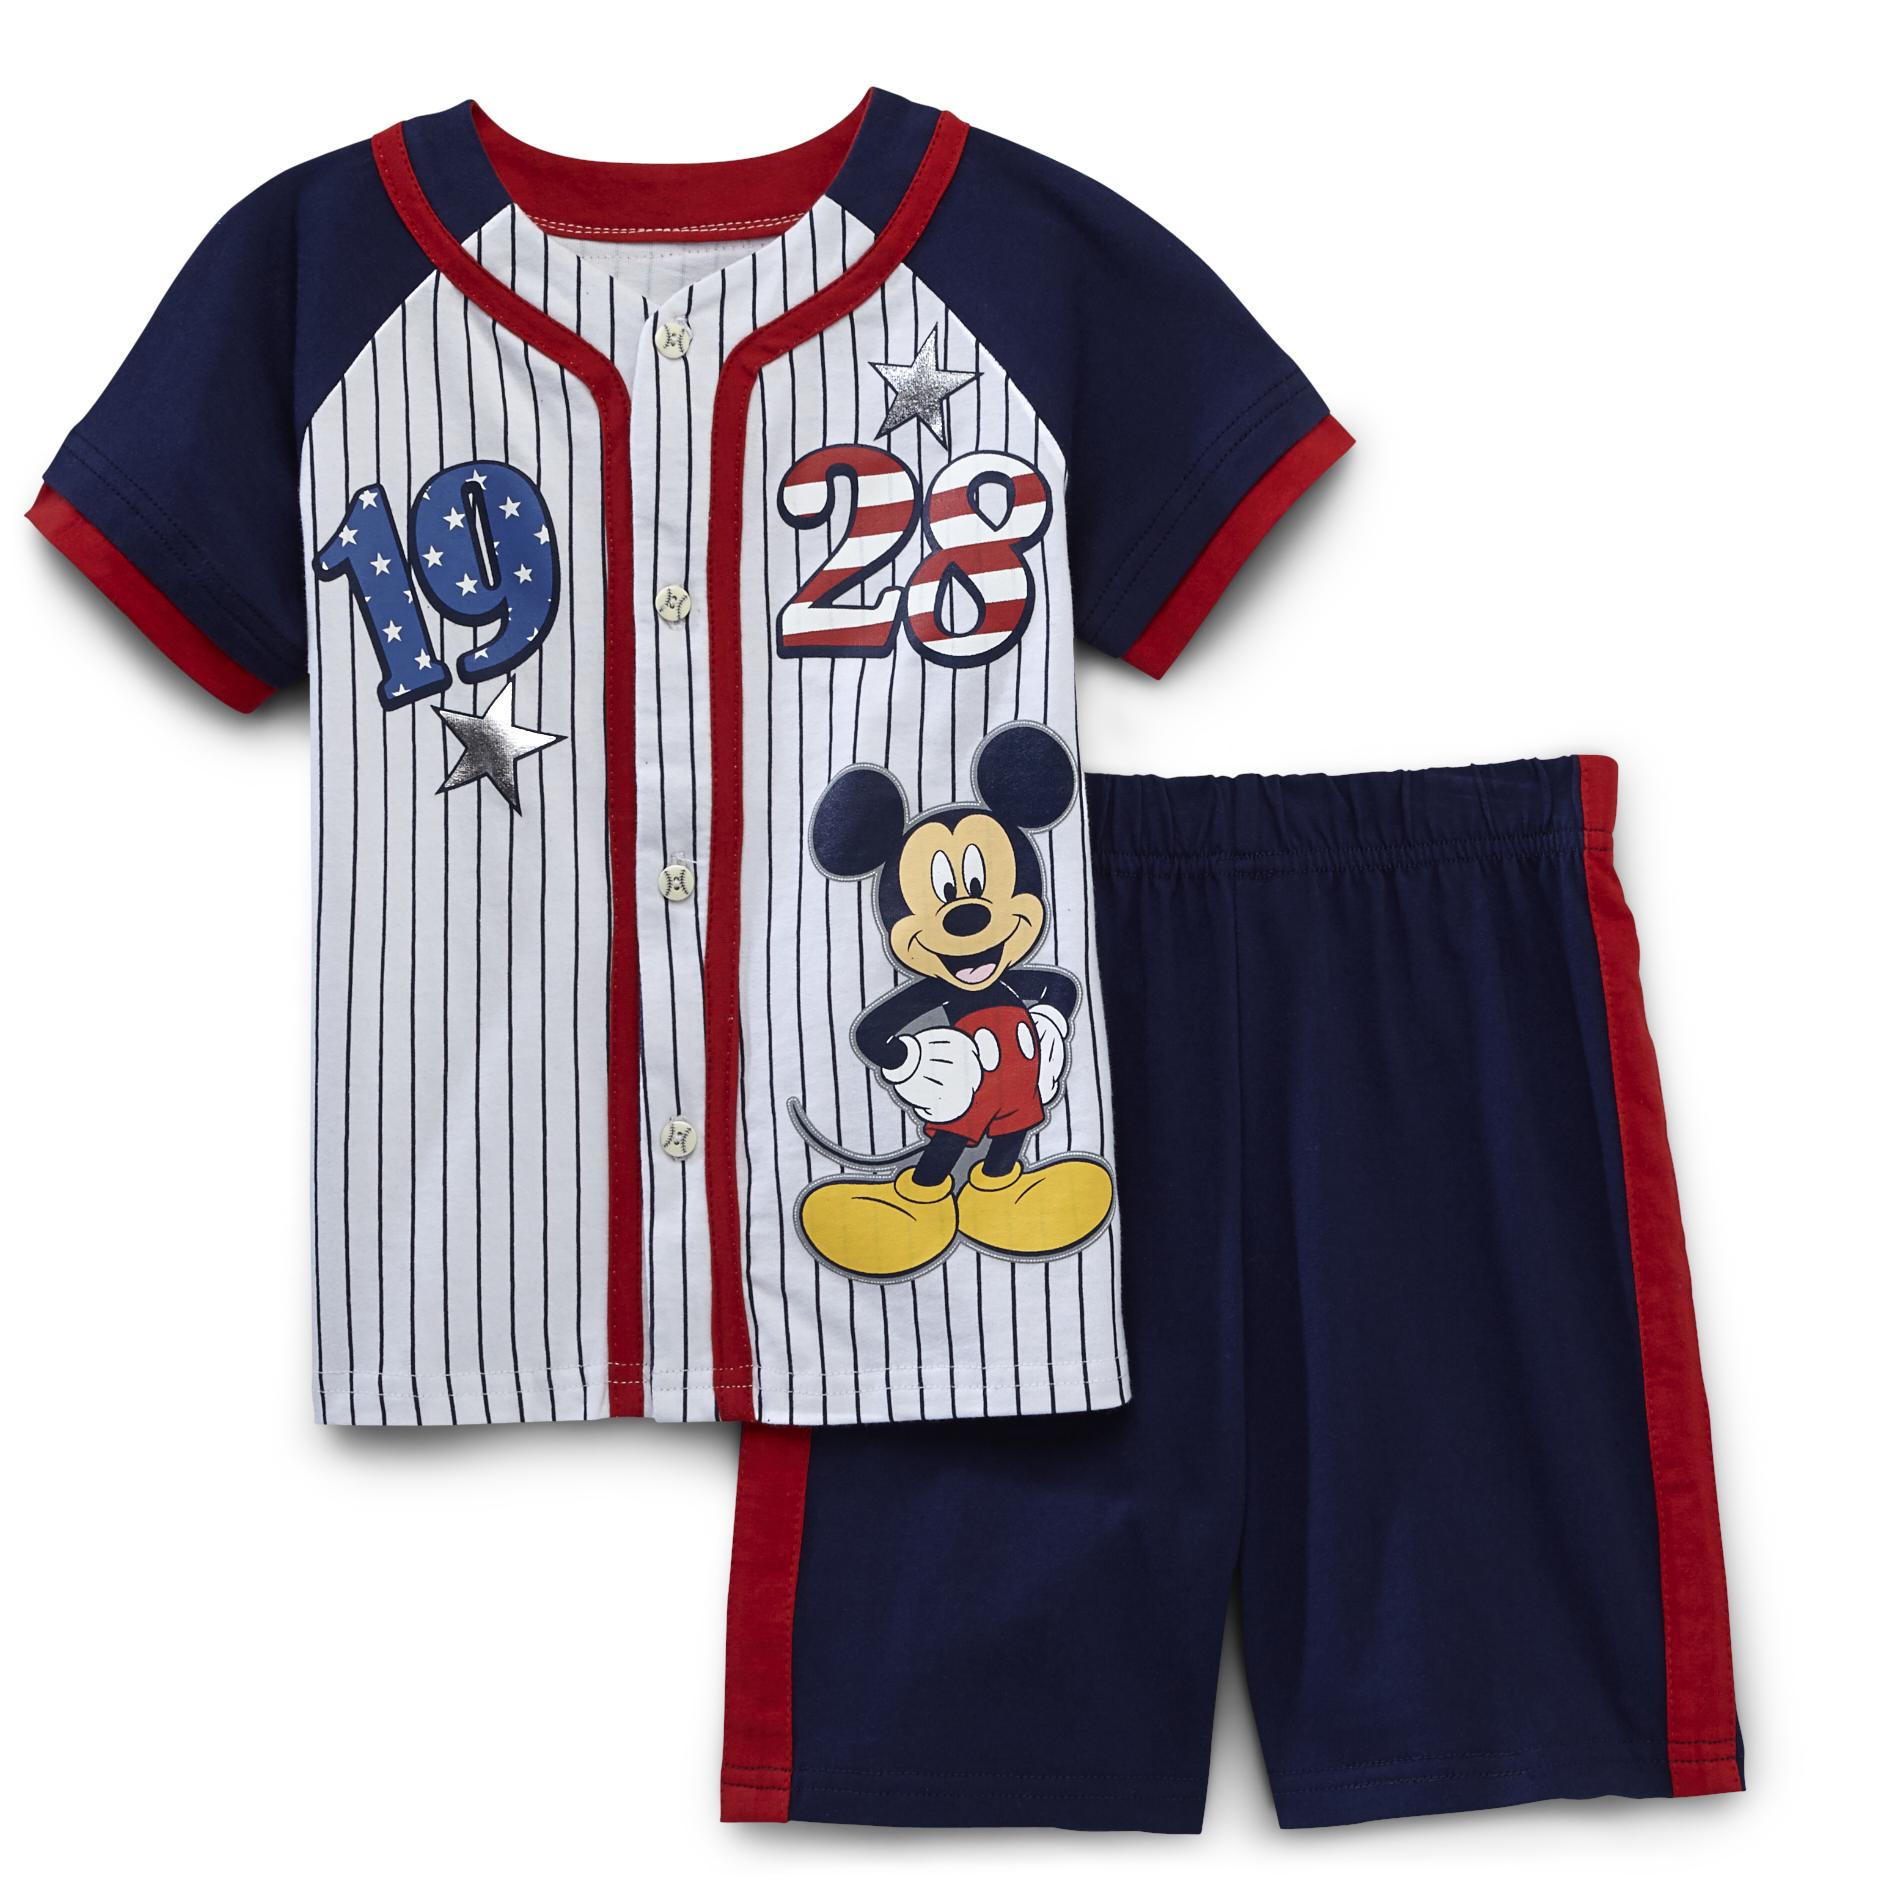 Disney Infant & Toddler Boy's Uniform Shirt & Shorts - Mickey Mouse